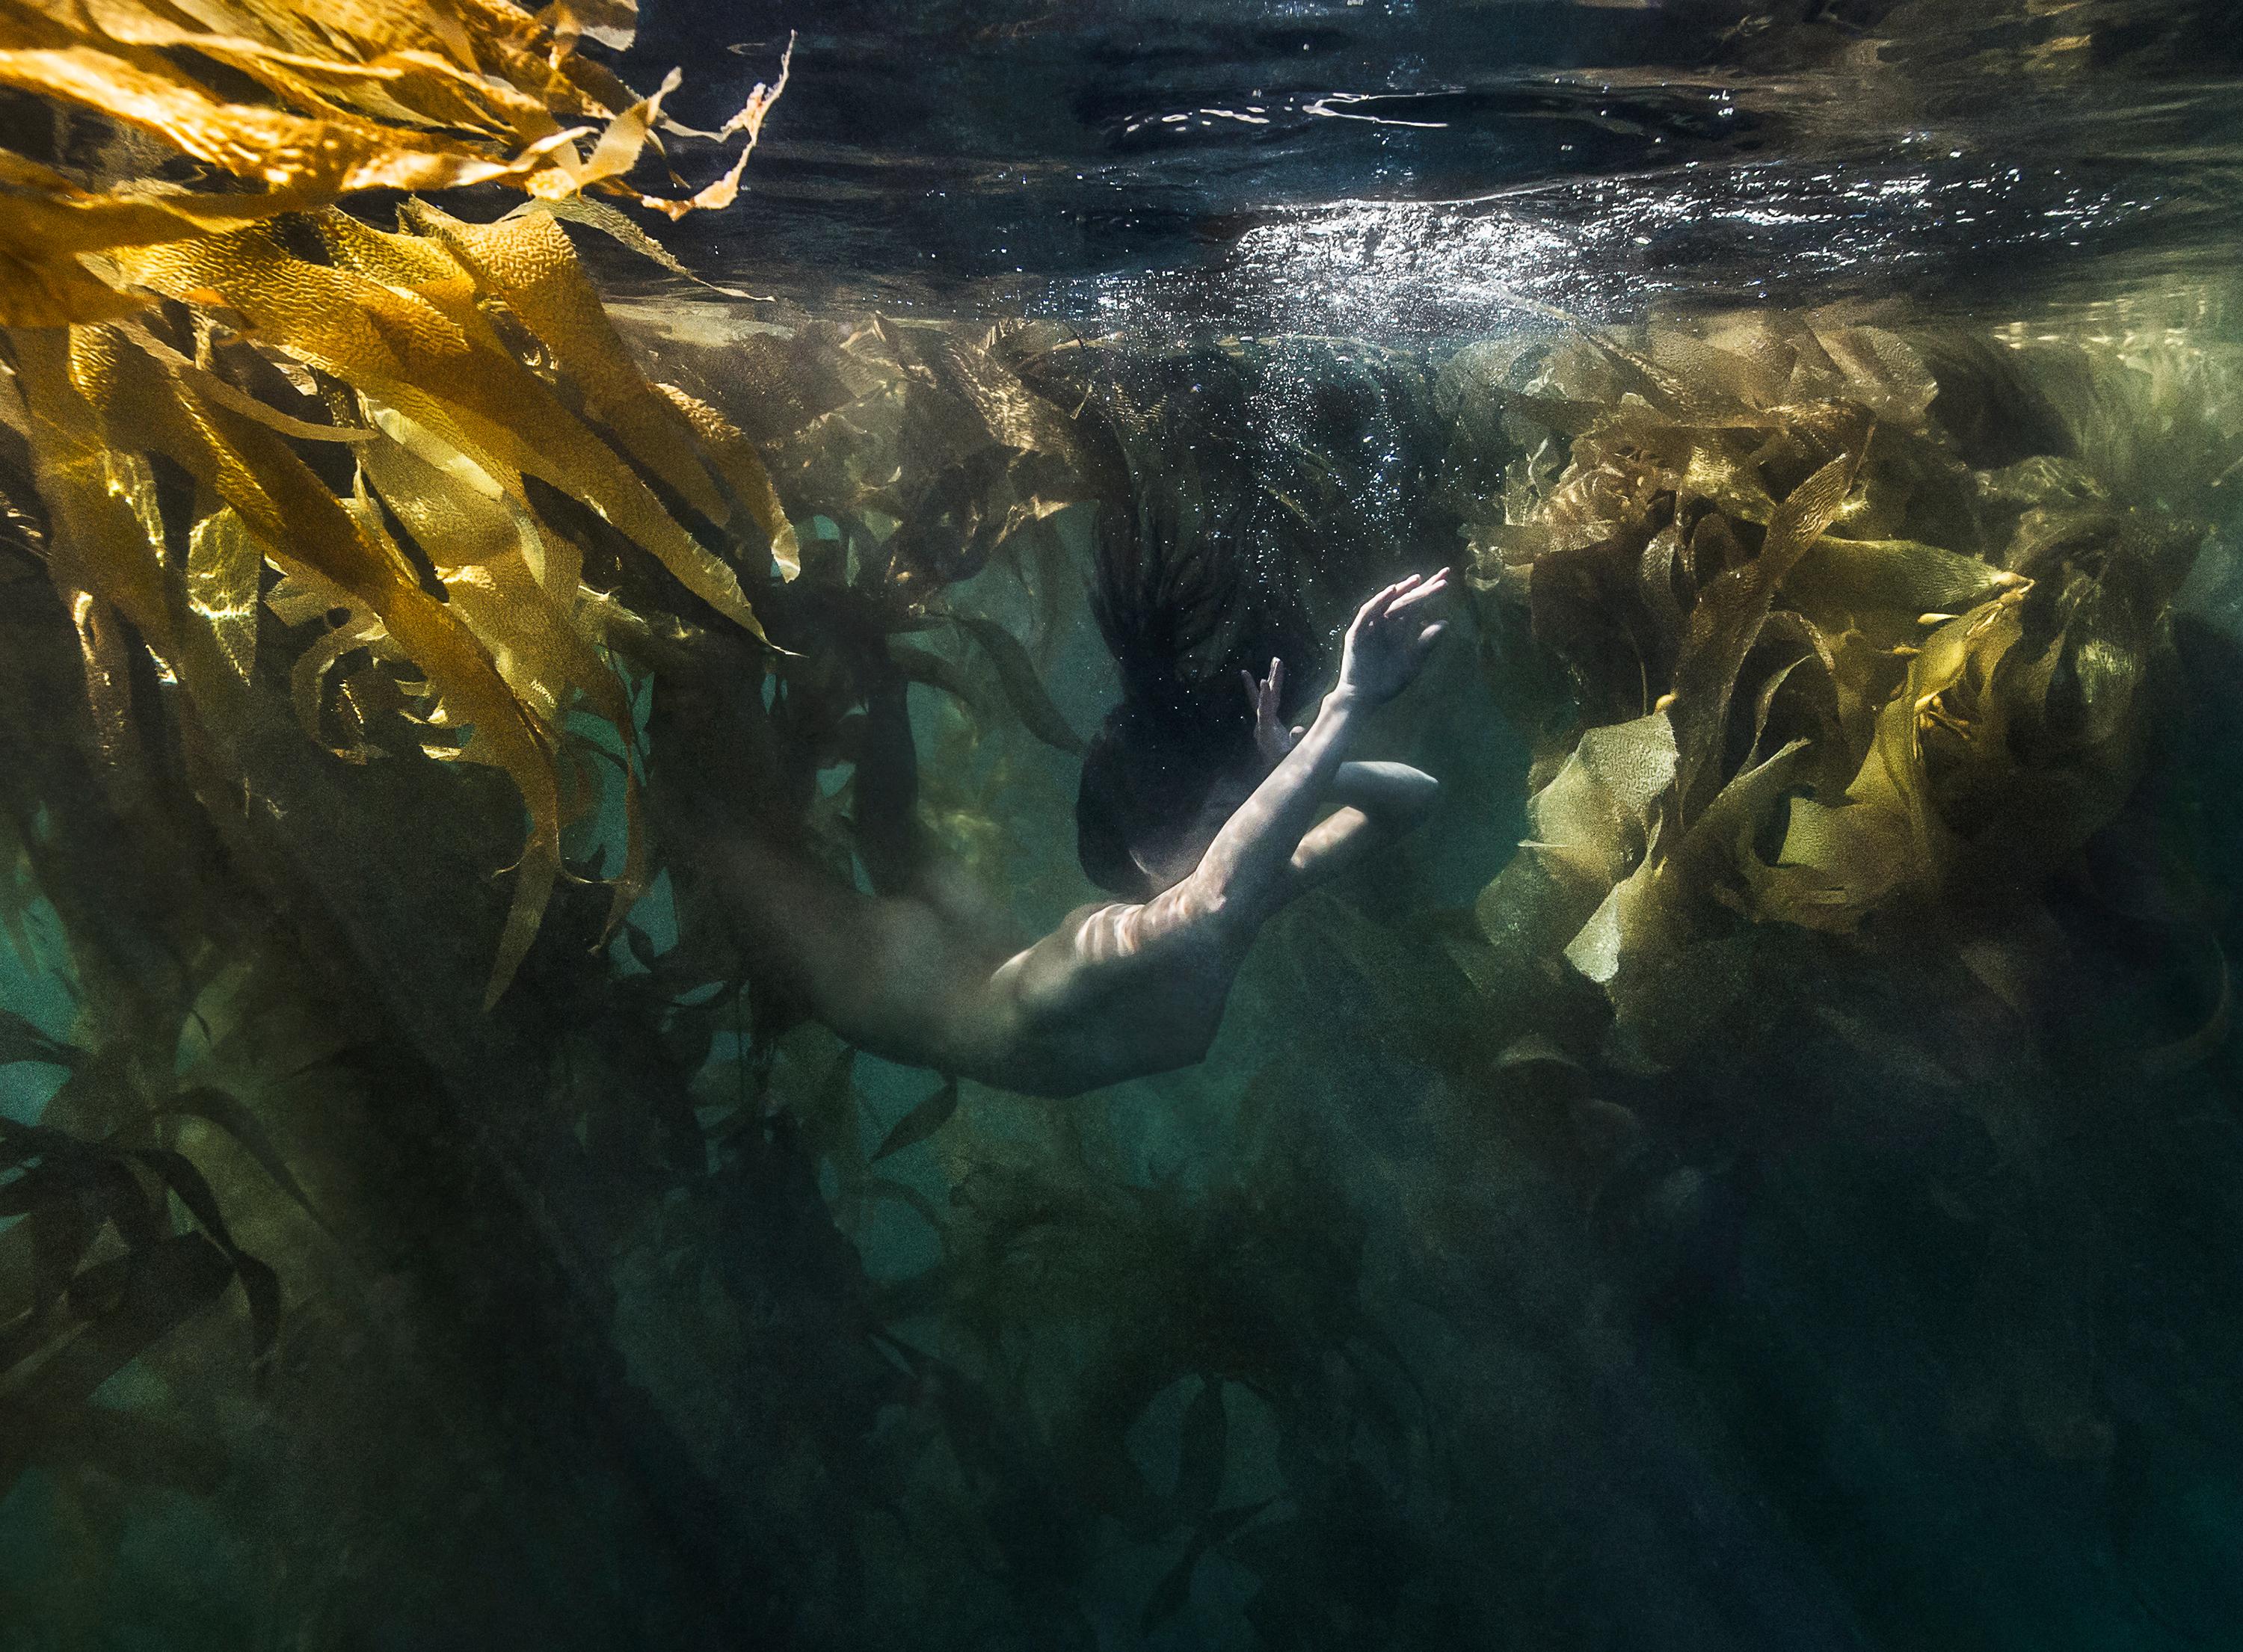 Jungle Mermaid - underwater ocean nude photograph - archival pigment 16x24